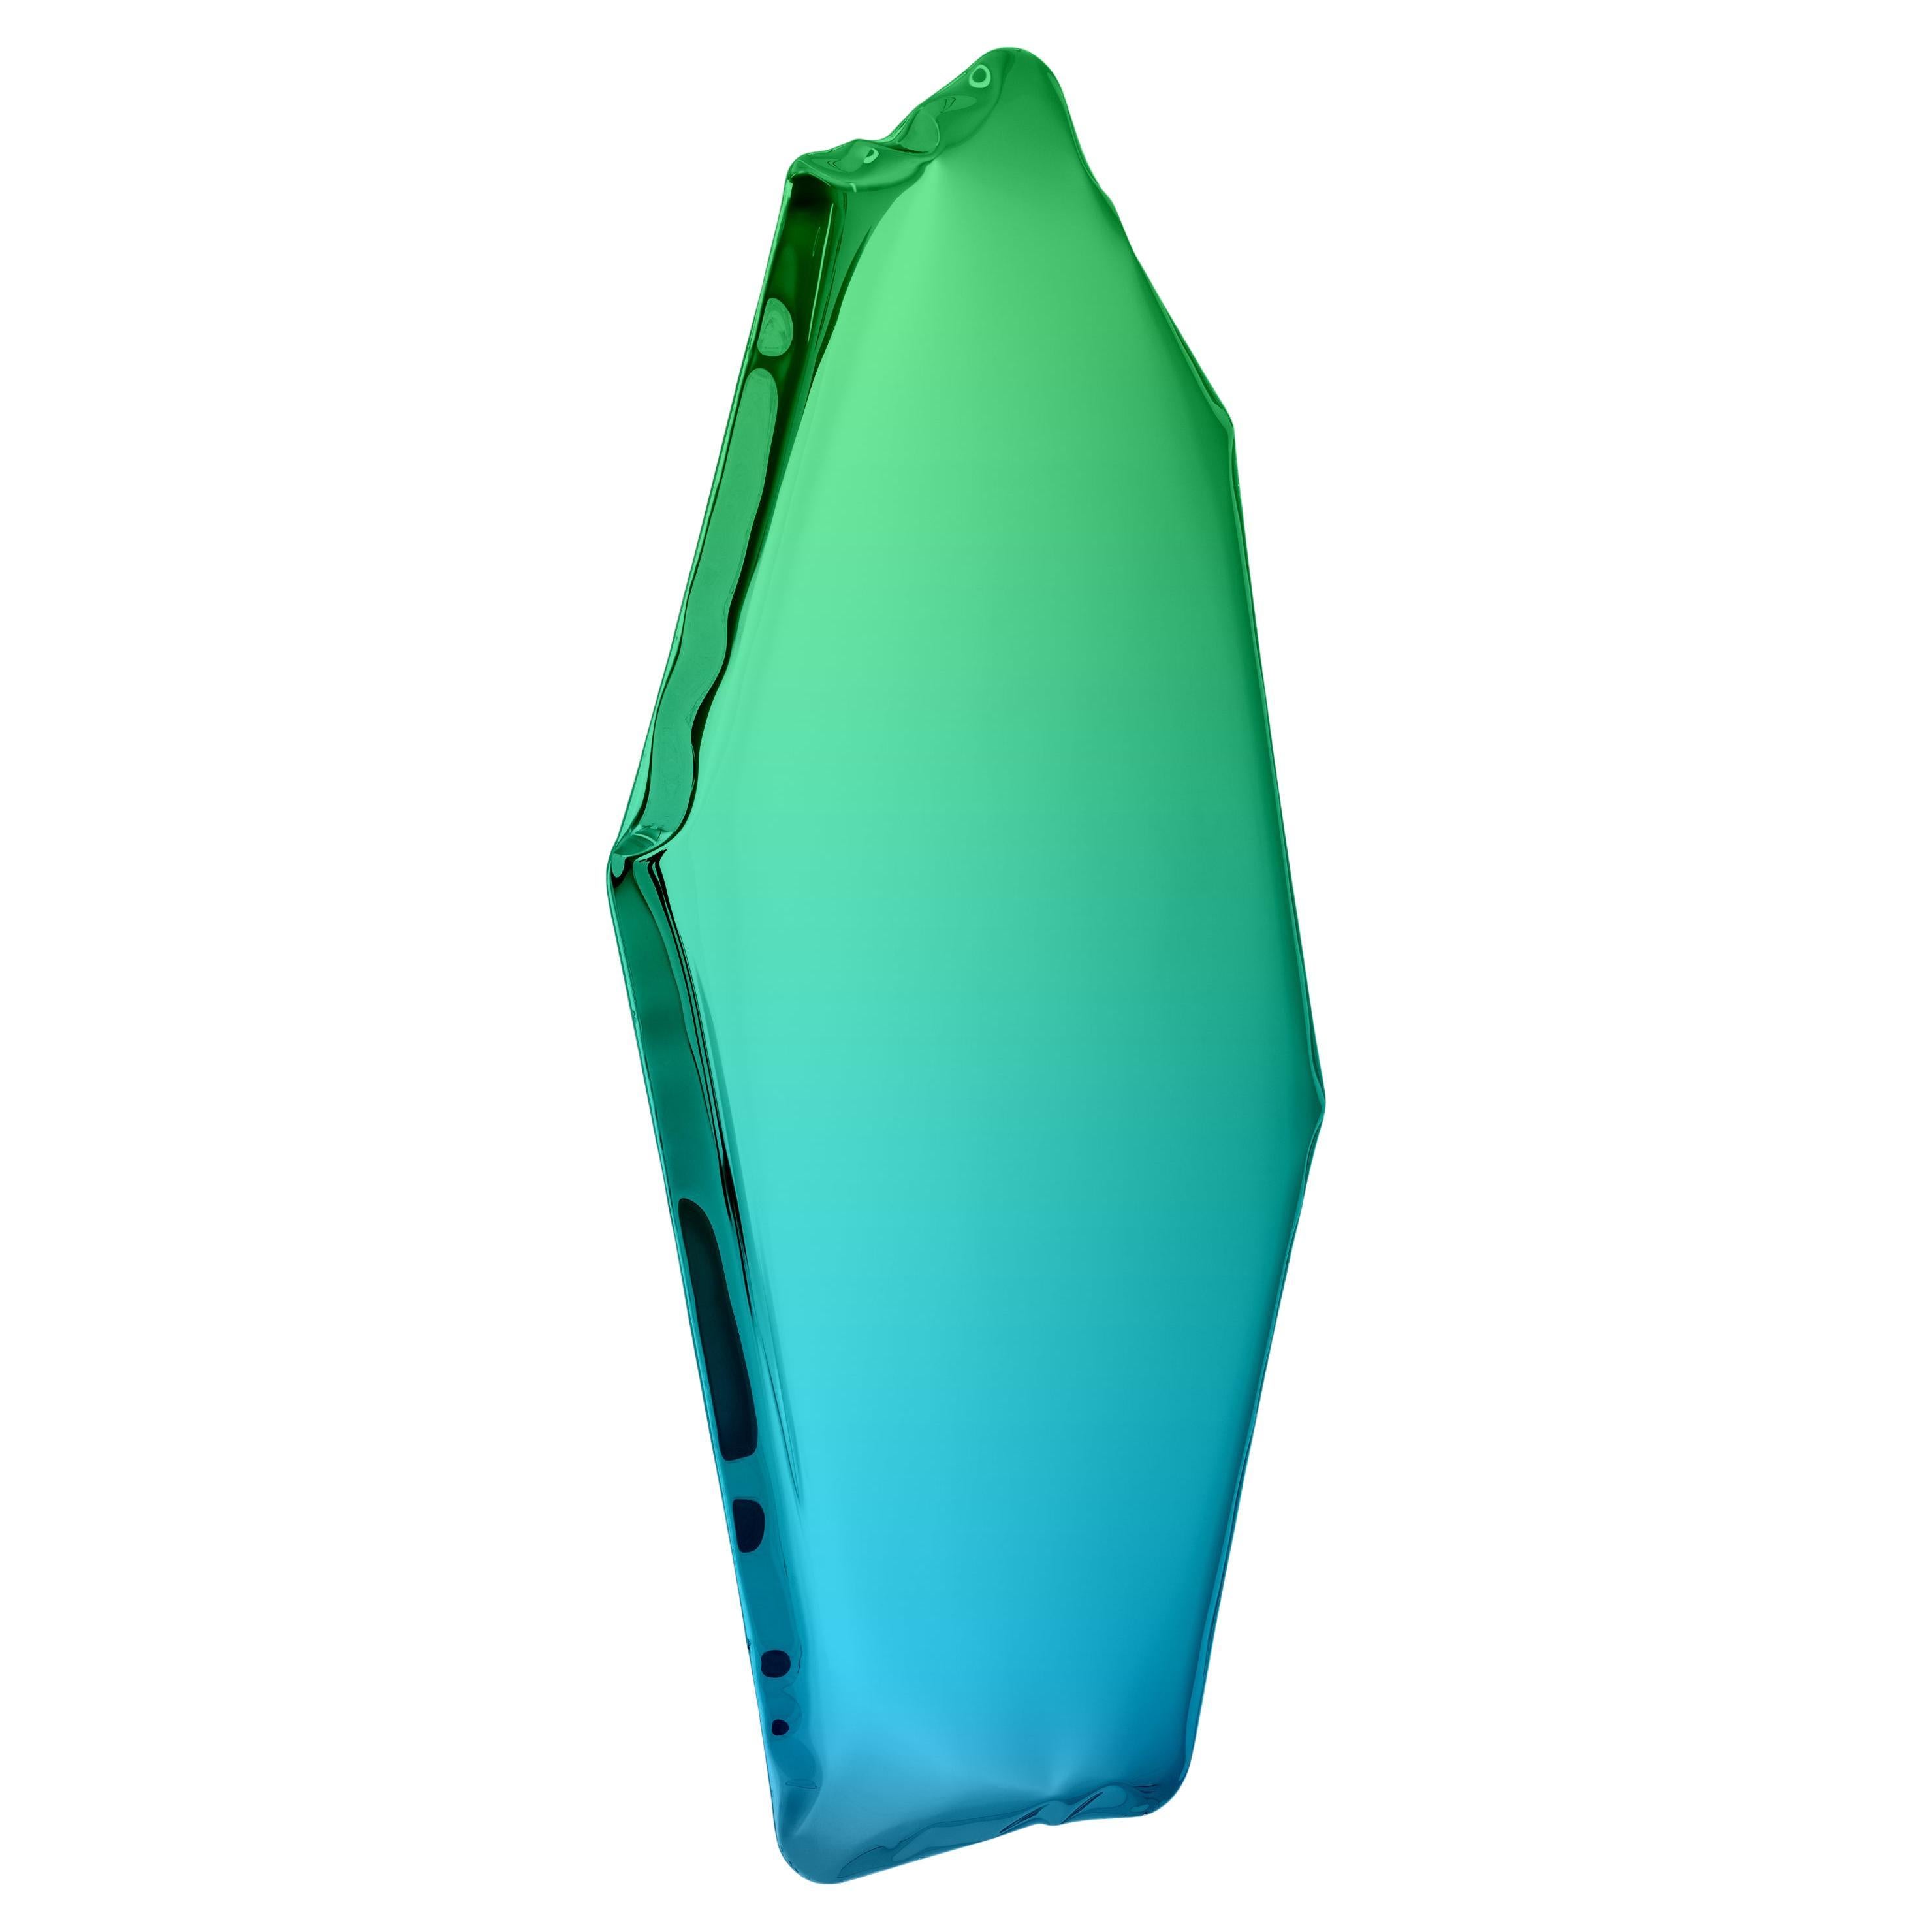 Sapphire Emerald Tafla C4 Sculptural Wall Mirror by Zieta